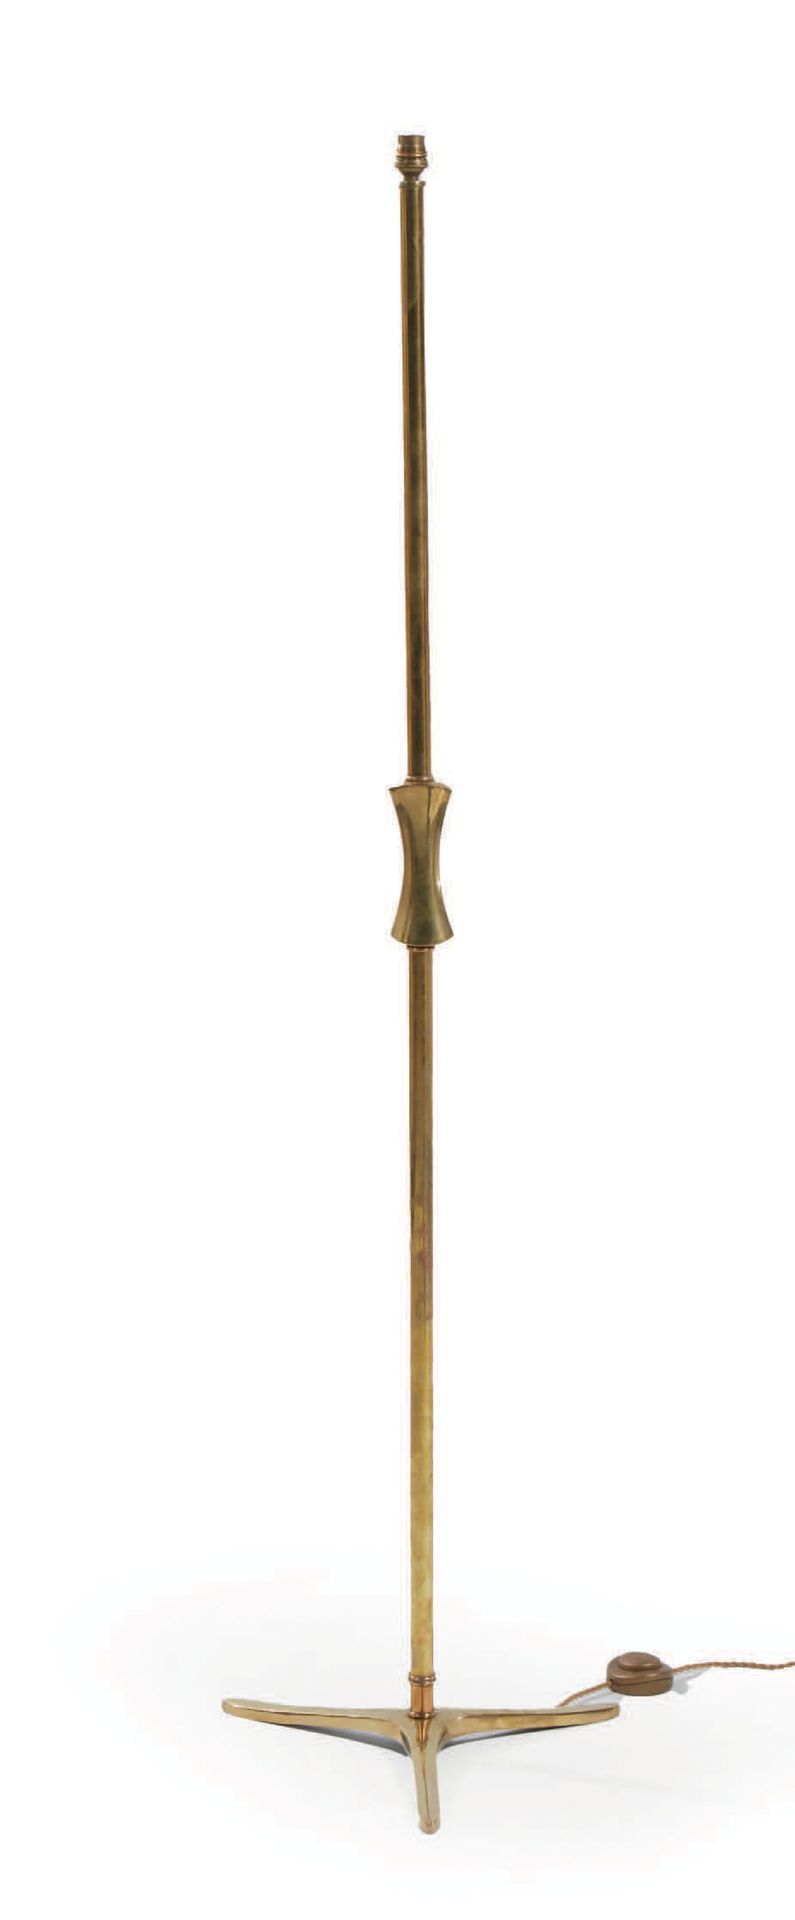 SCARPA, ATTRIBUÉ À Lampada da terra in bronzo dorato
H: 149 cm